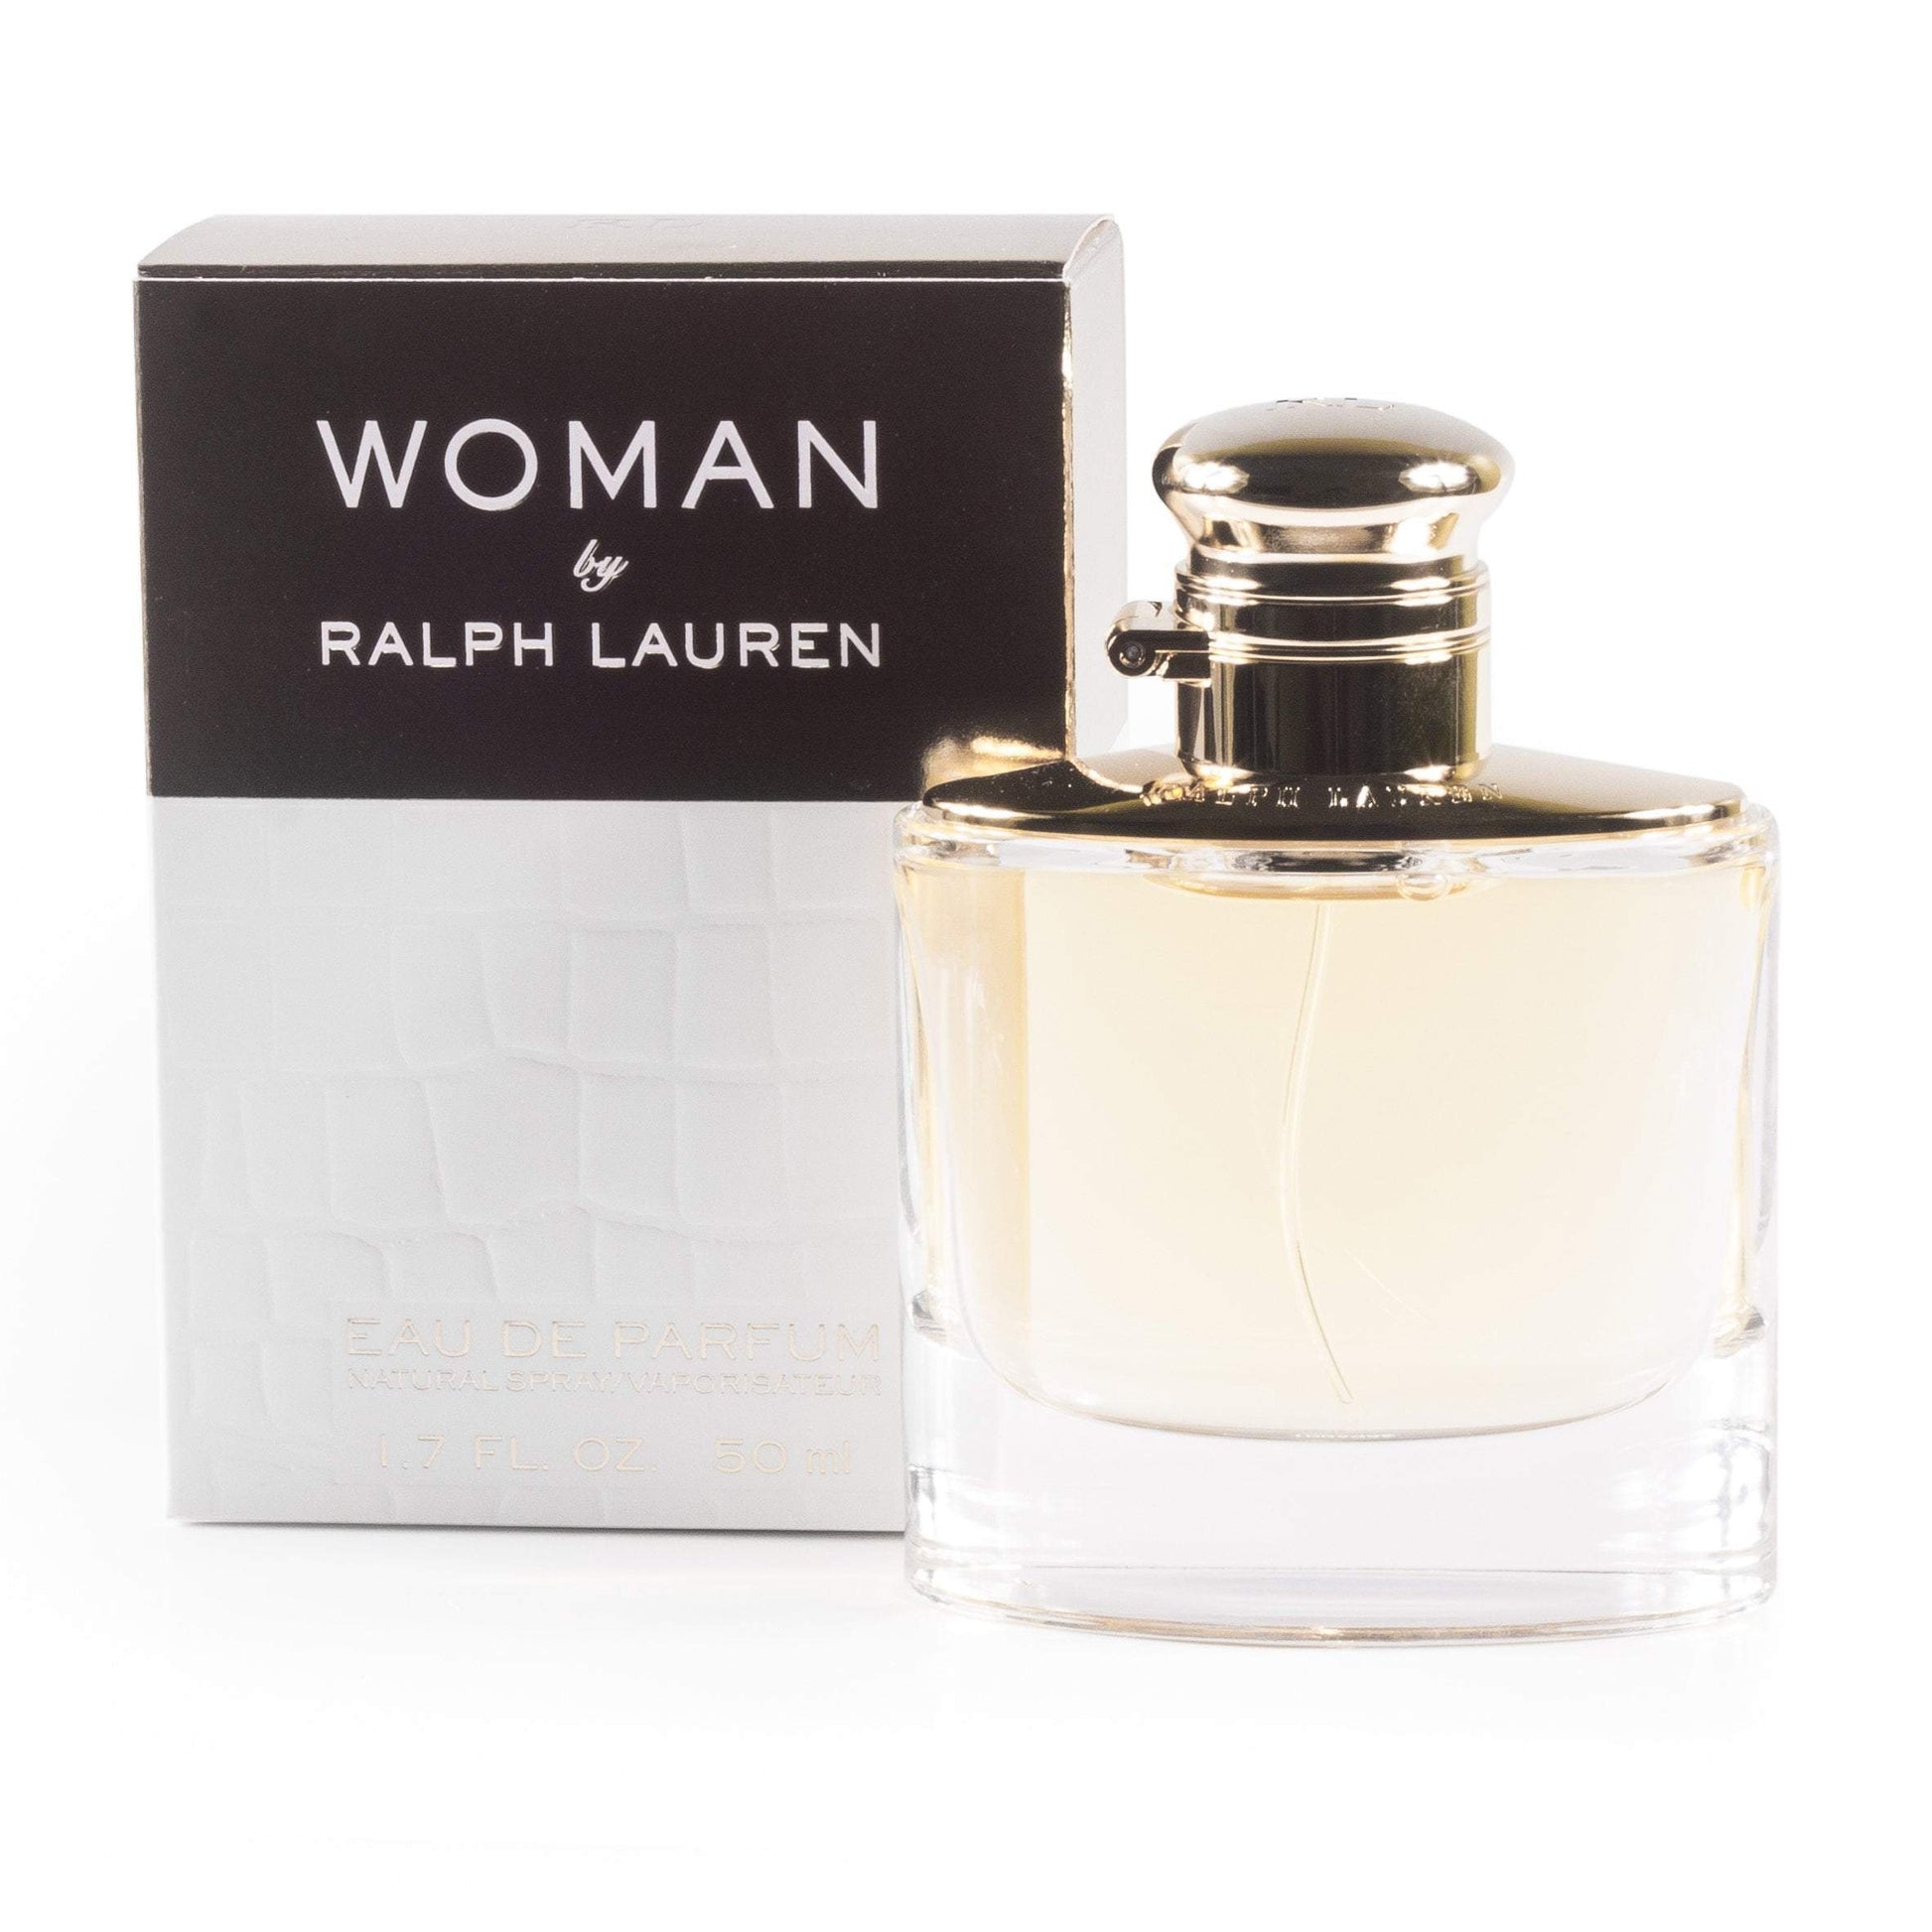 Woman Eau de Parfum Spray for Women by Ralph Lauren 1.7 oz. Click to open in modal